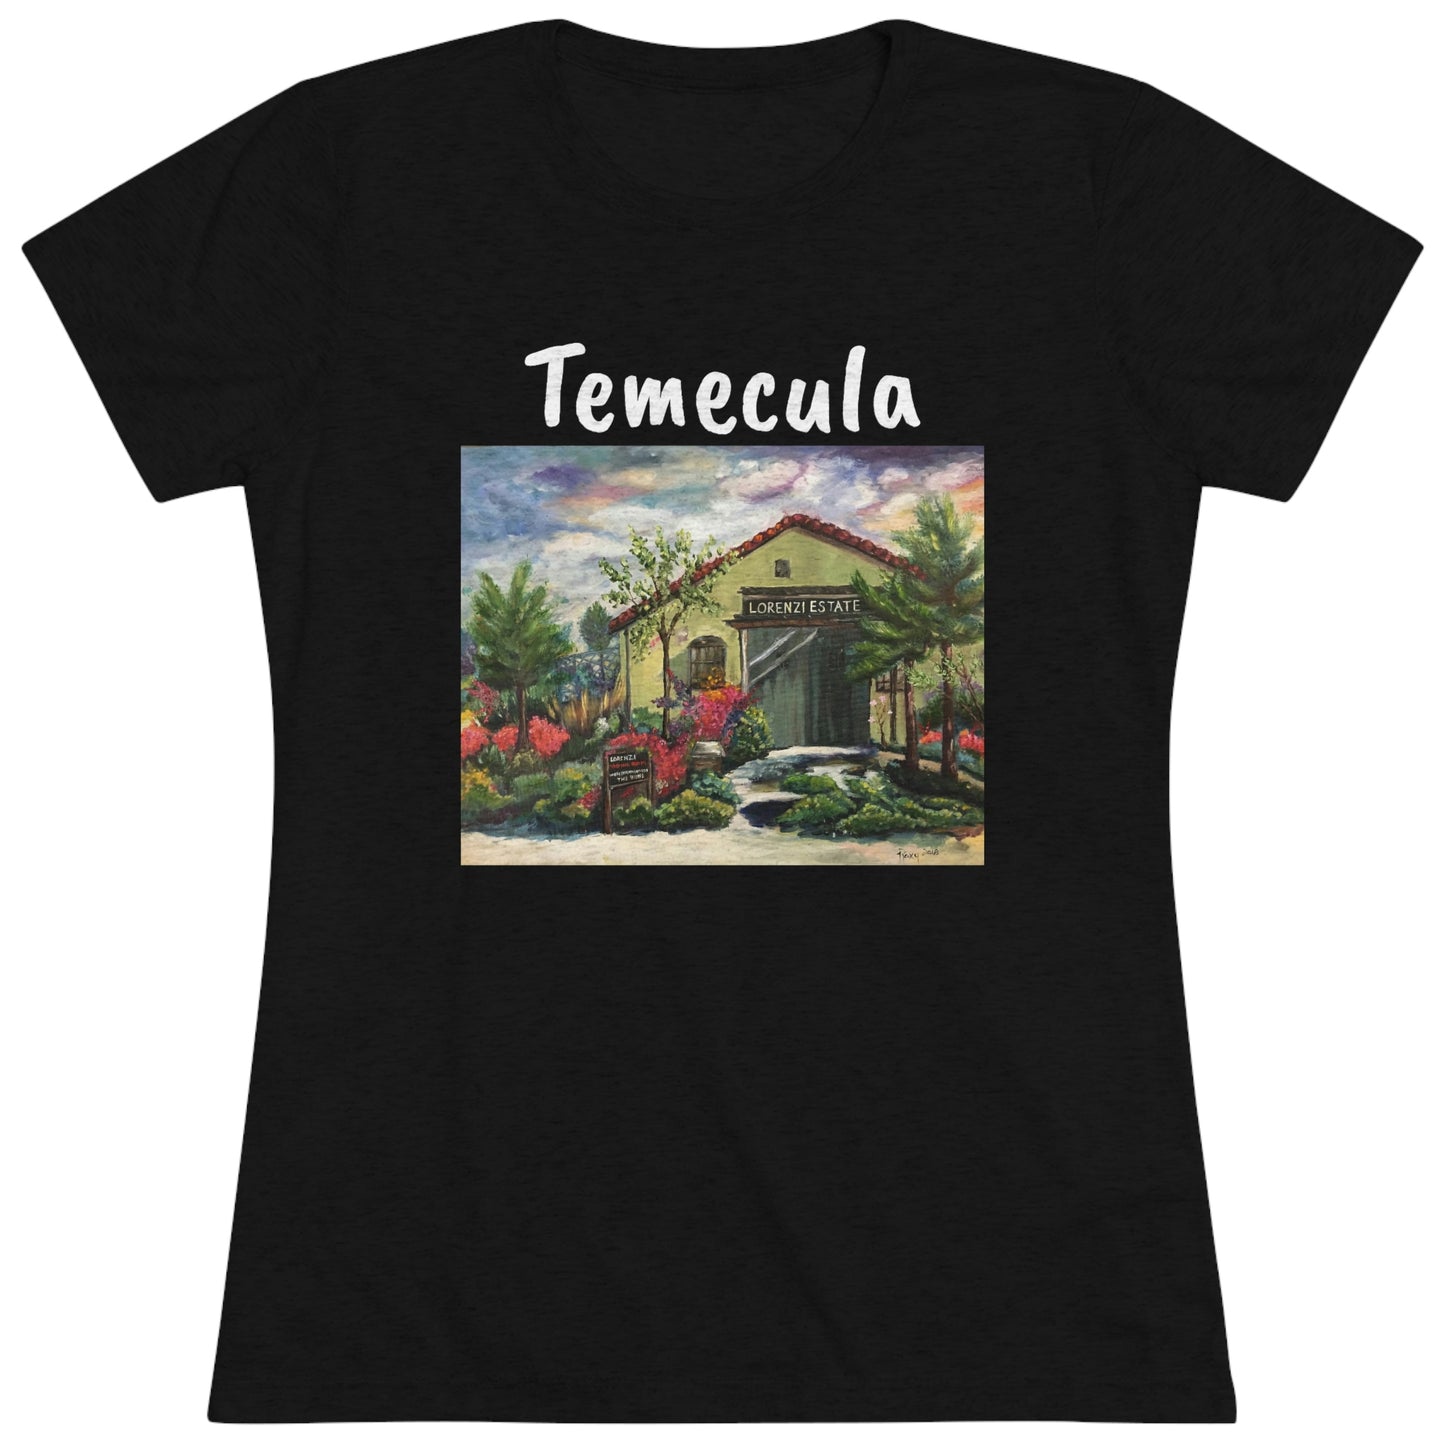 Lorenzi Estate Wines Temecula Women's fitted Triblend Tee  tee shirt